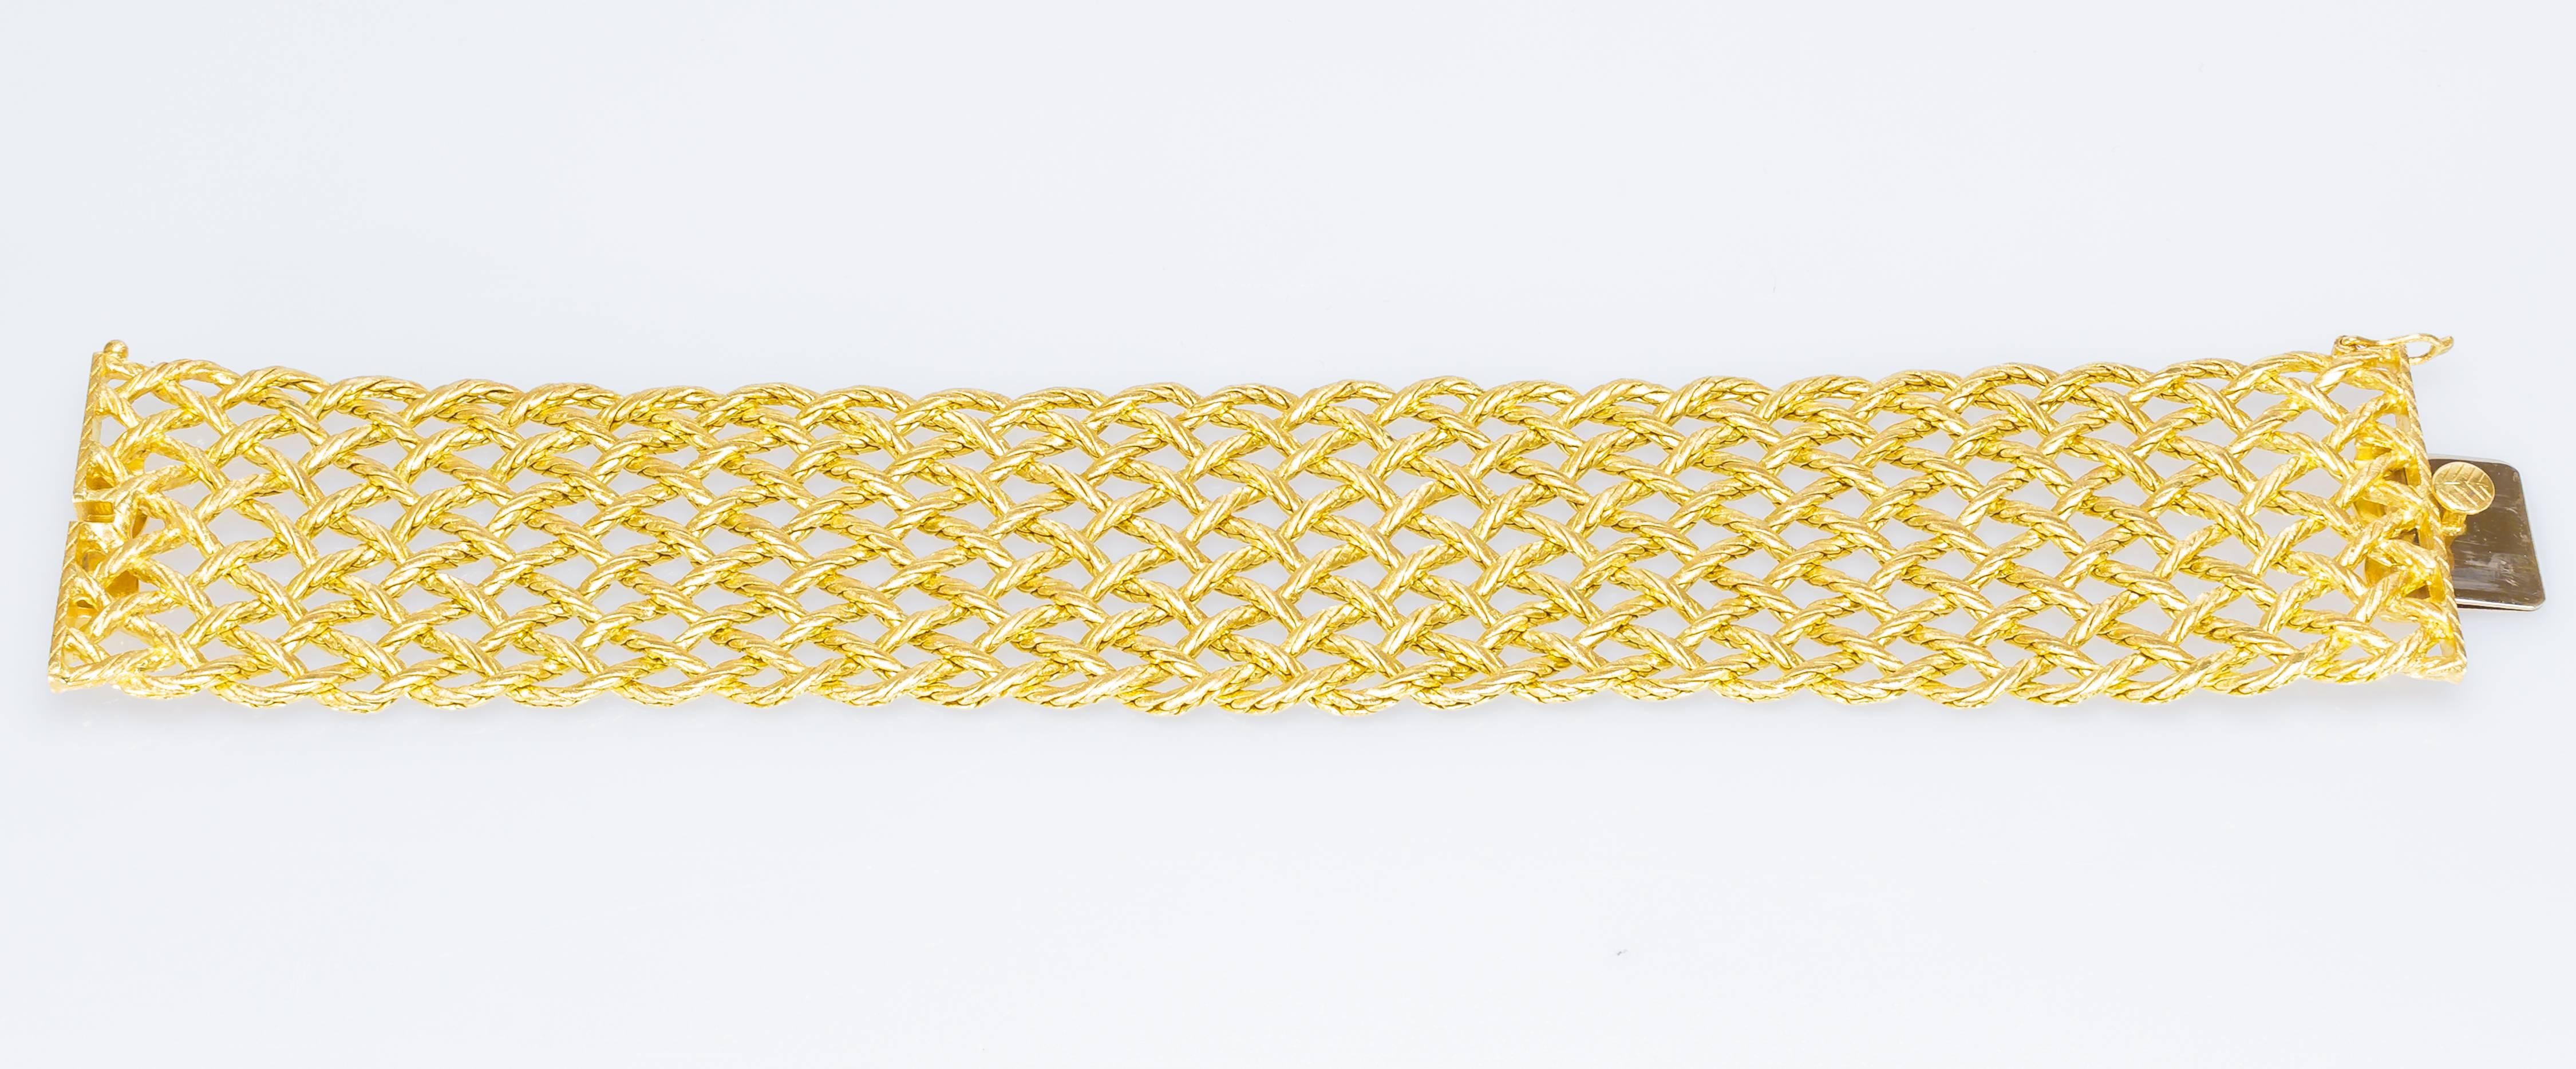 Buccellati Crepe de Chine, 12 Row Chain Woven Gold Bracelet, 7 3/8